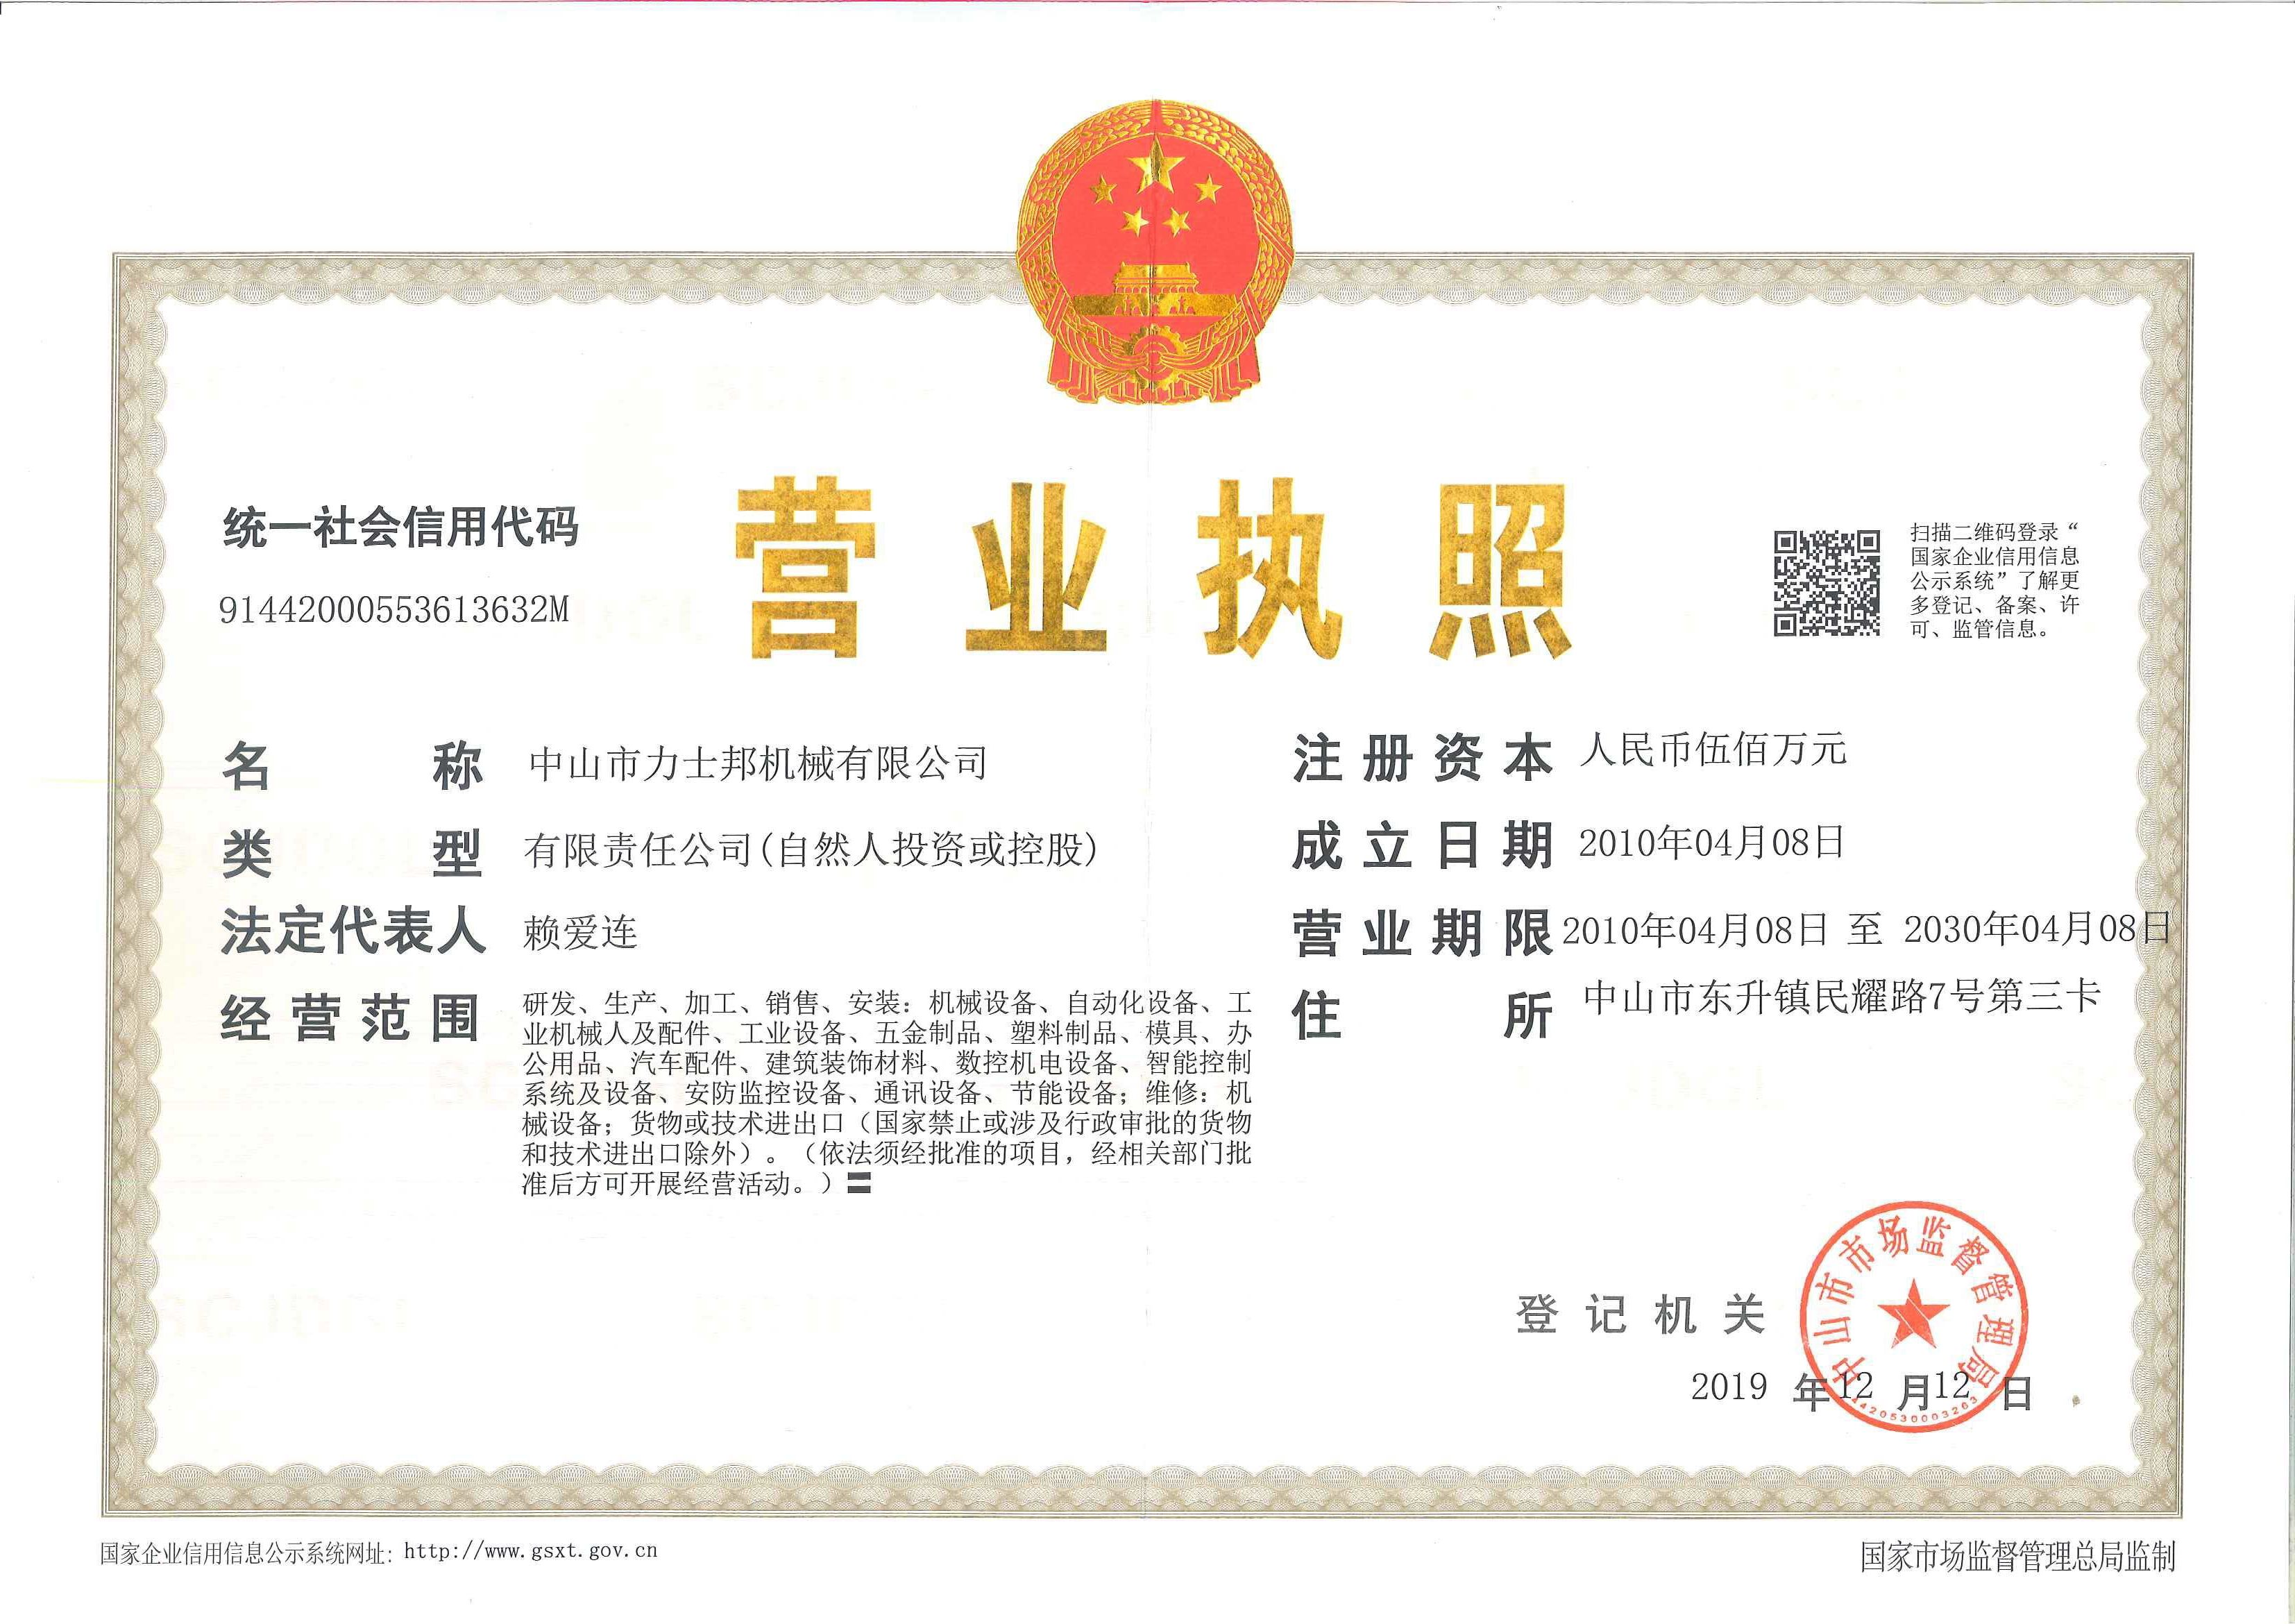 Zhongshan Luxbond Machinery Co., Ltd.